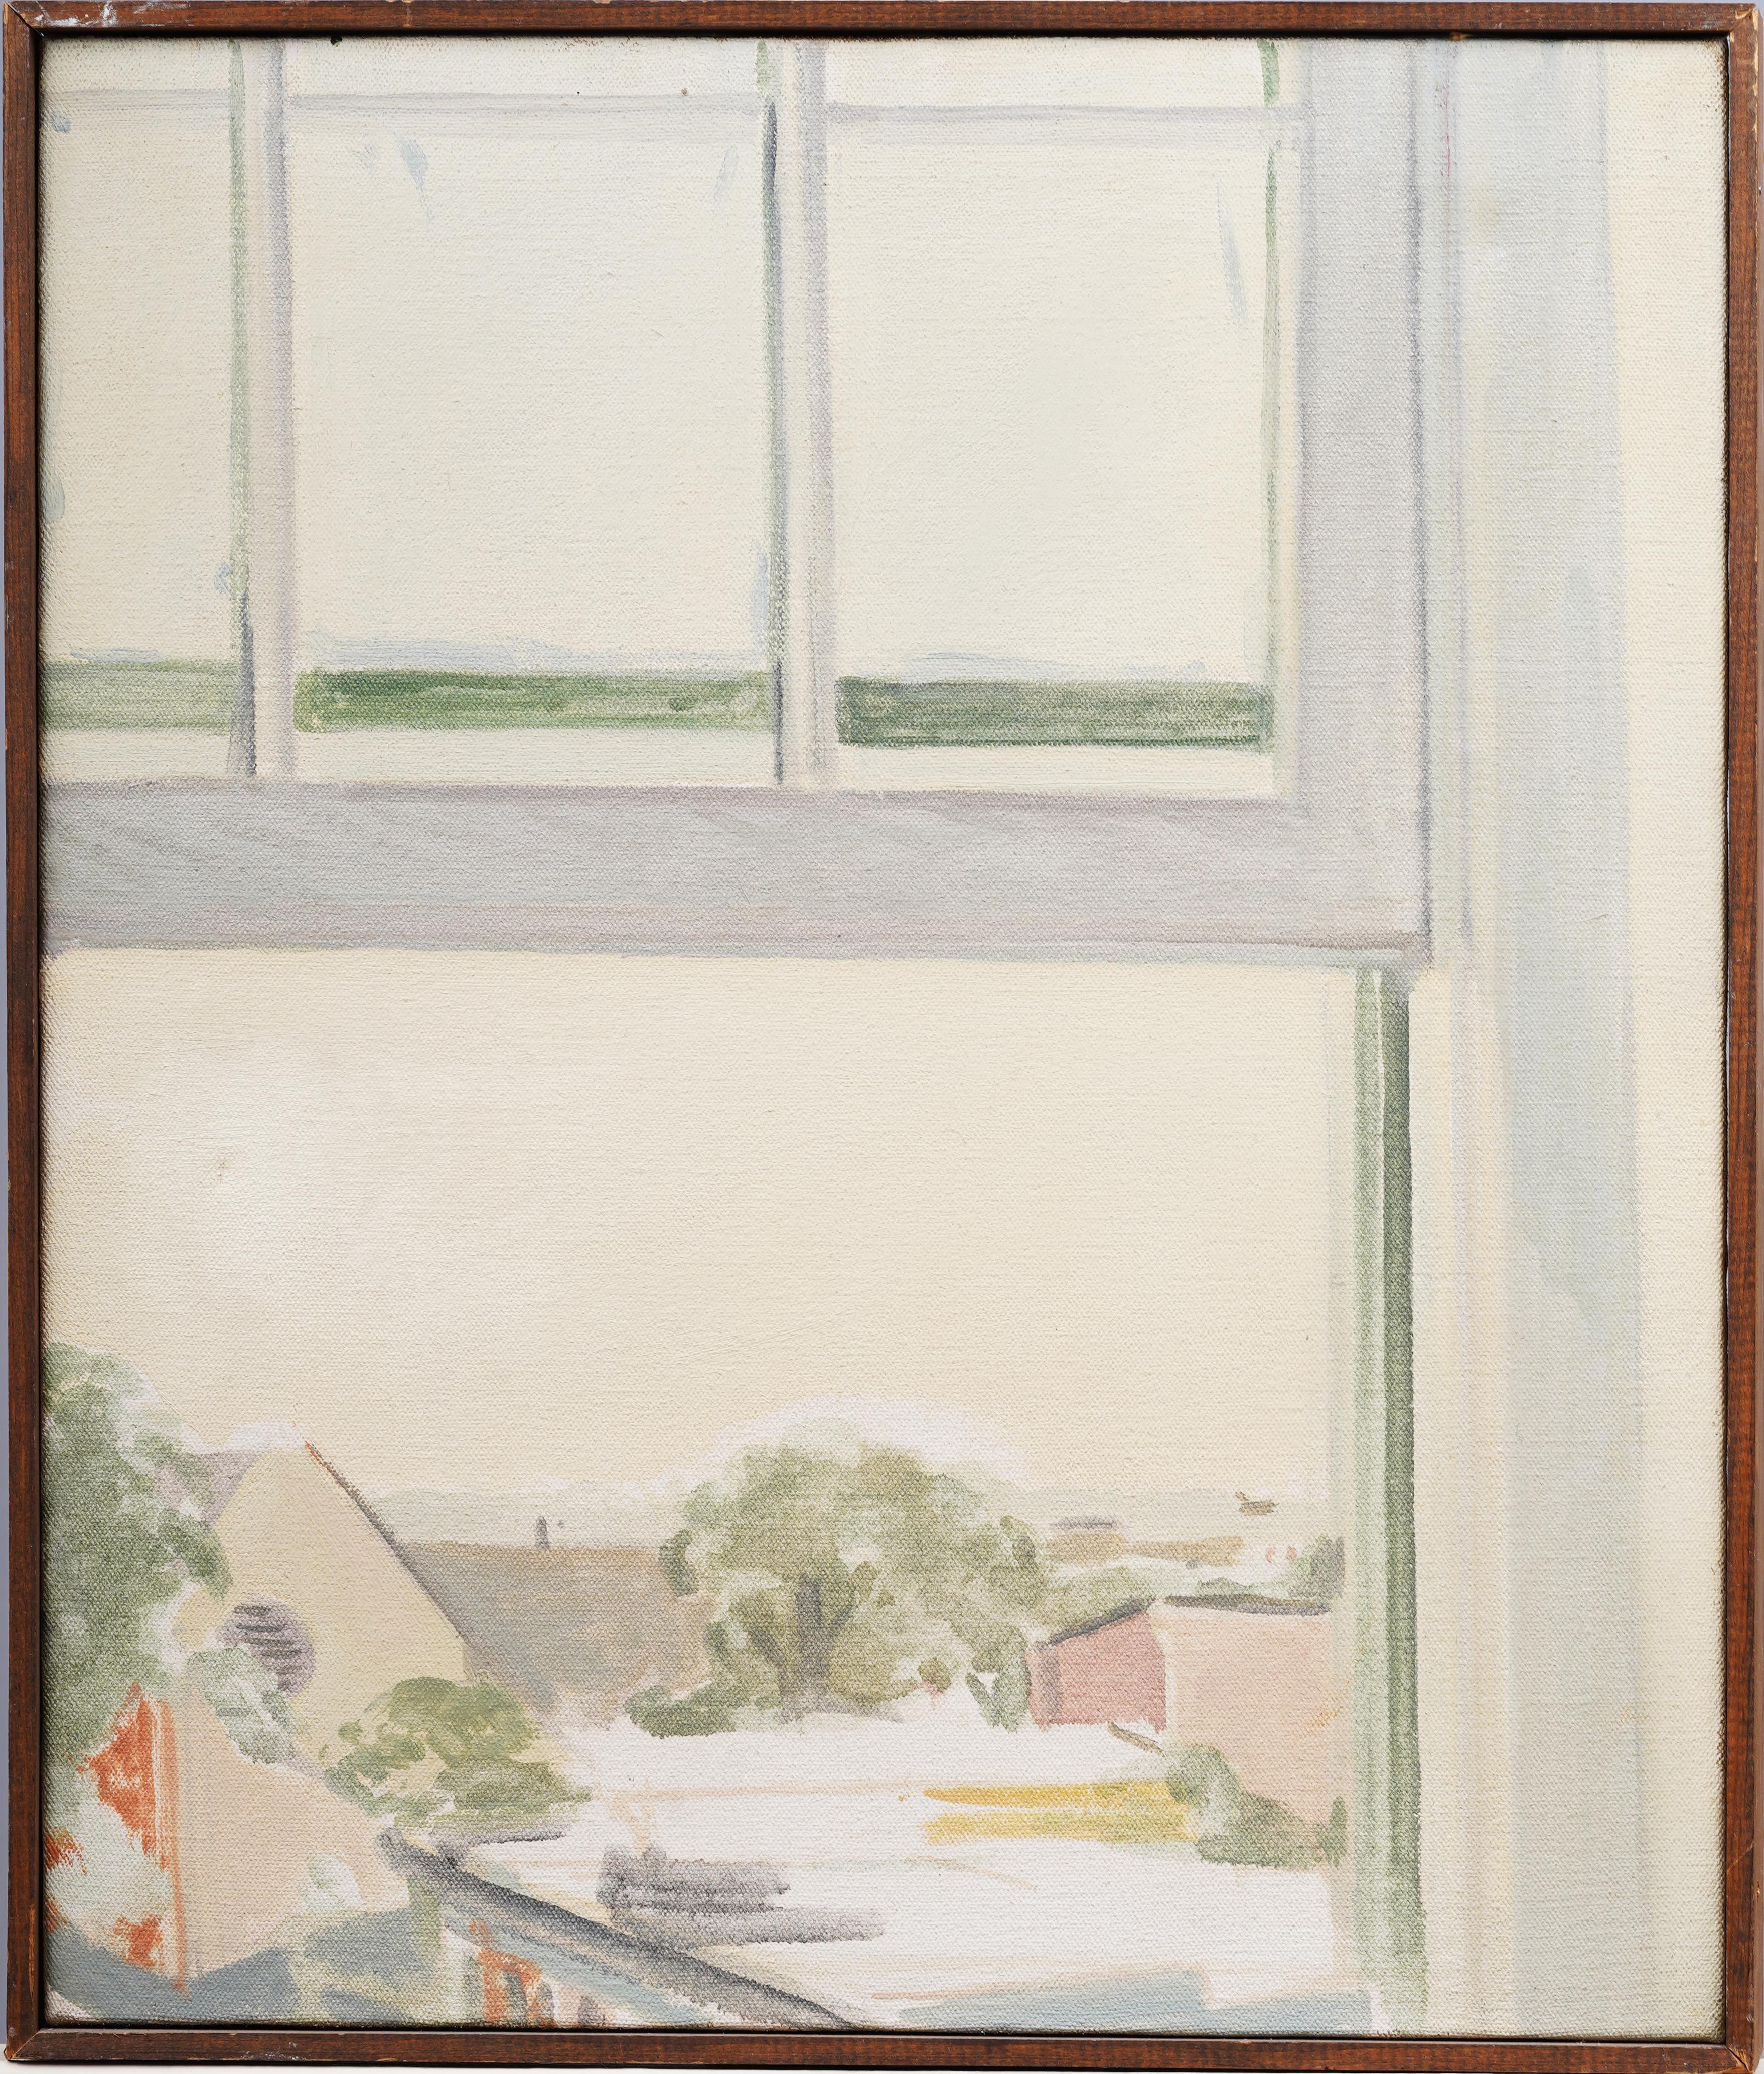 Alan Peters Landscape Painting - Antique American Modernist Trompe L"Oeil Window Modernist City View Oil Painting